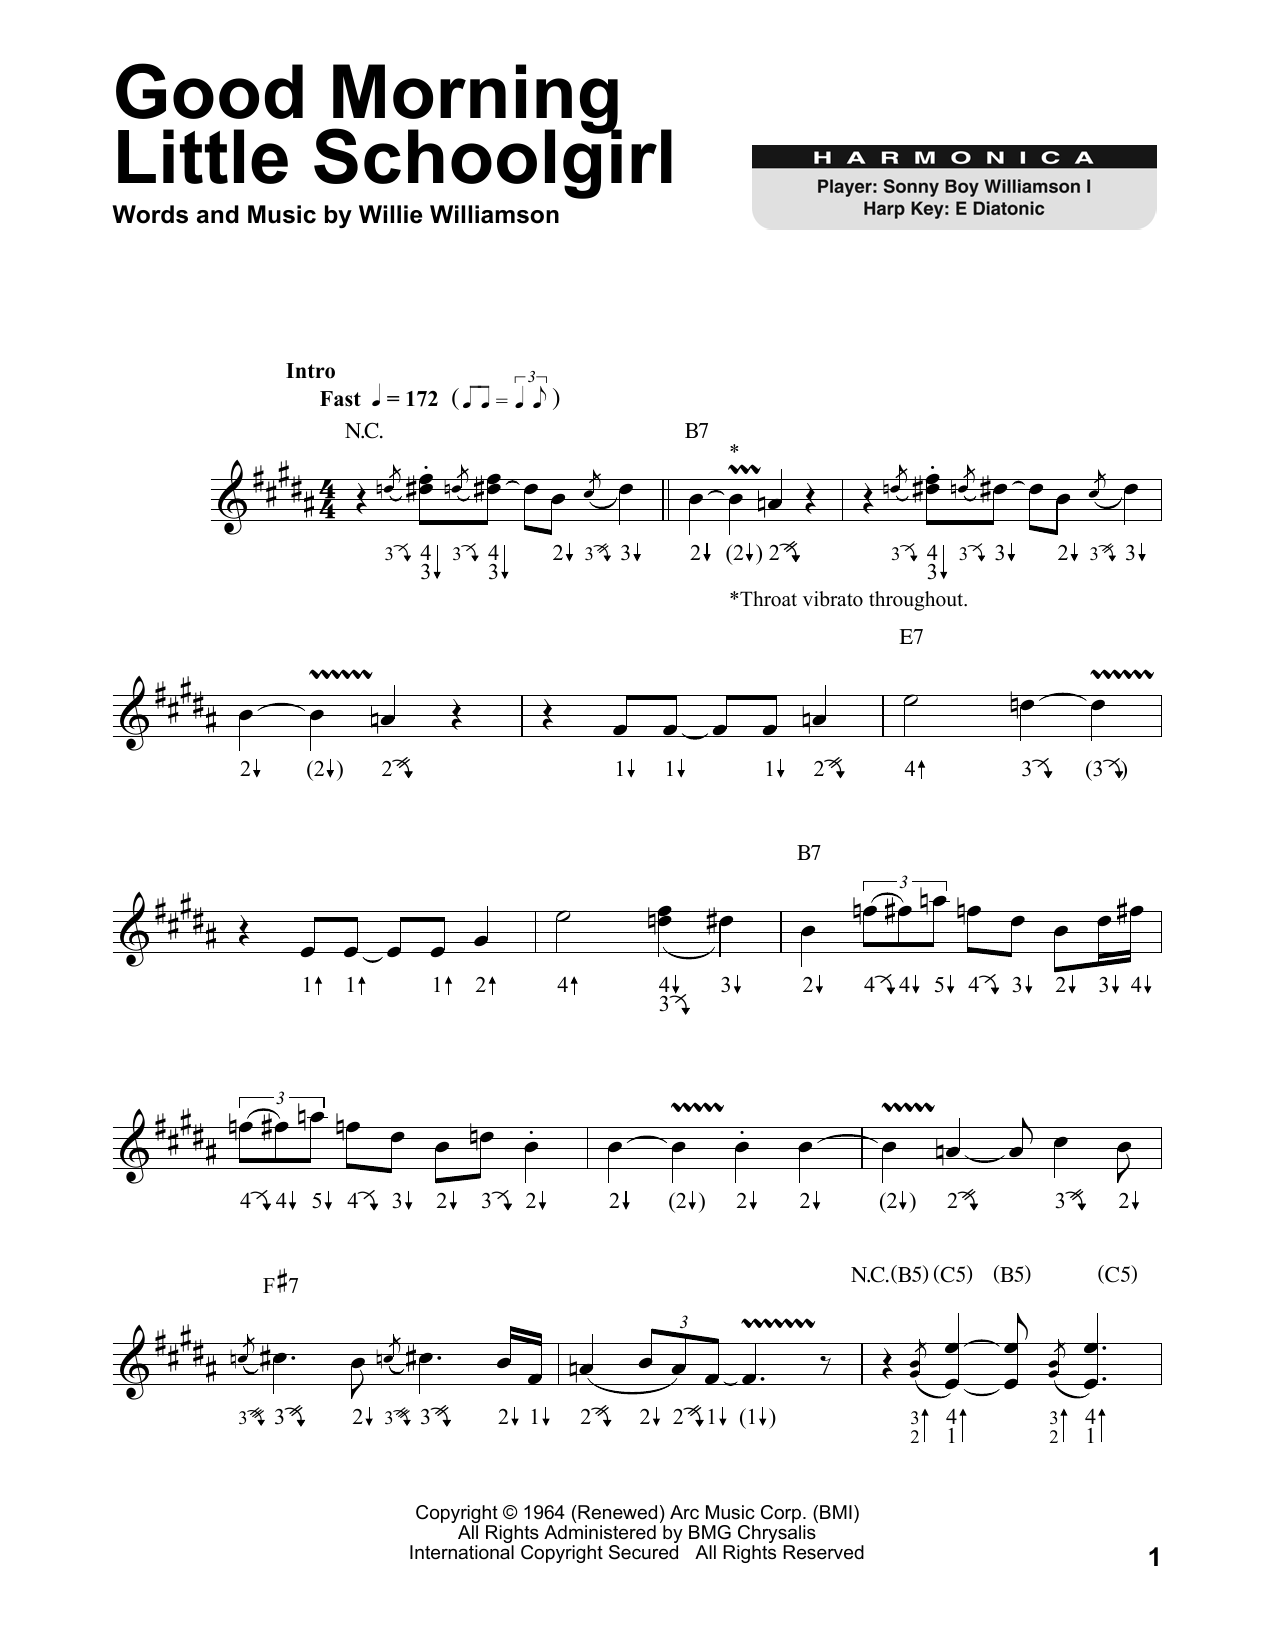 Sonny Boy Williamson Good Morning Little Schoolgirl Sheet Music Notes & Chords for Lyrics & Chords - Download or Print PDF